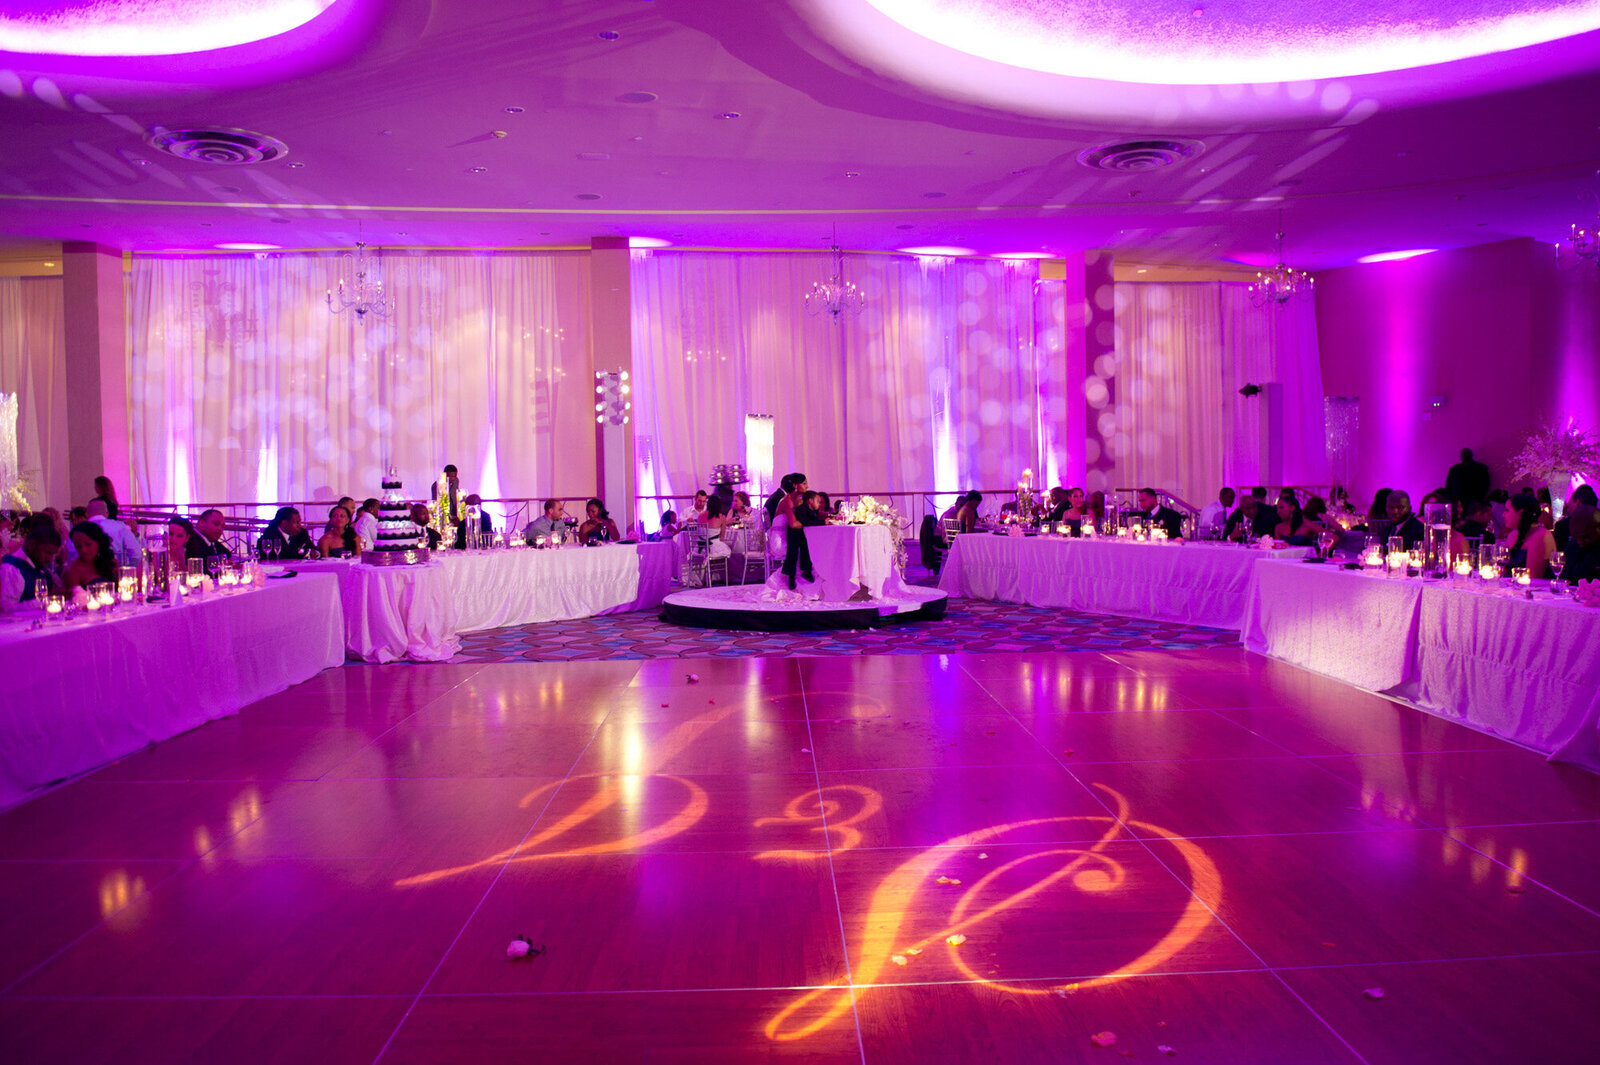 Wedding reception dance floor with guests